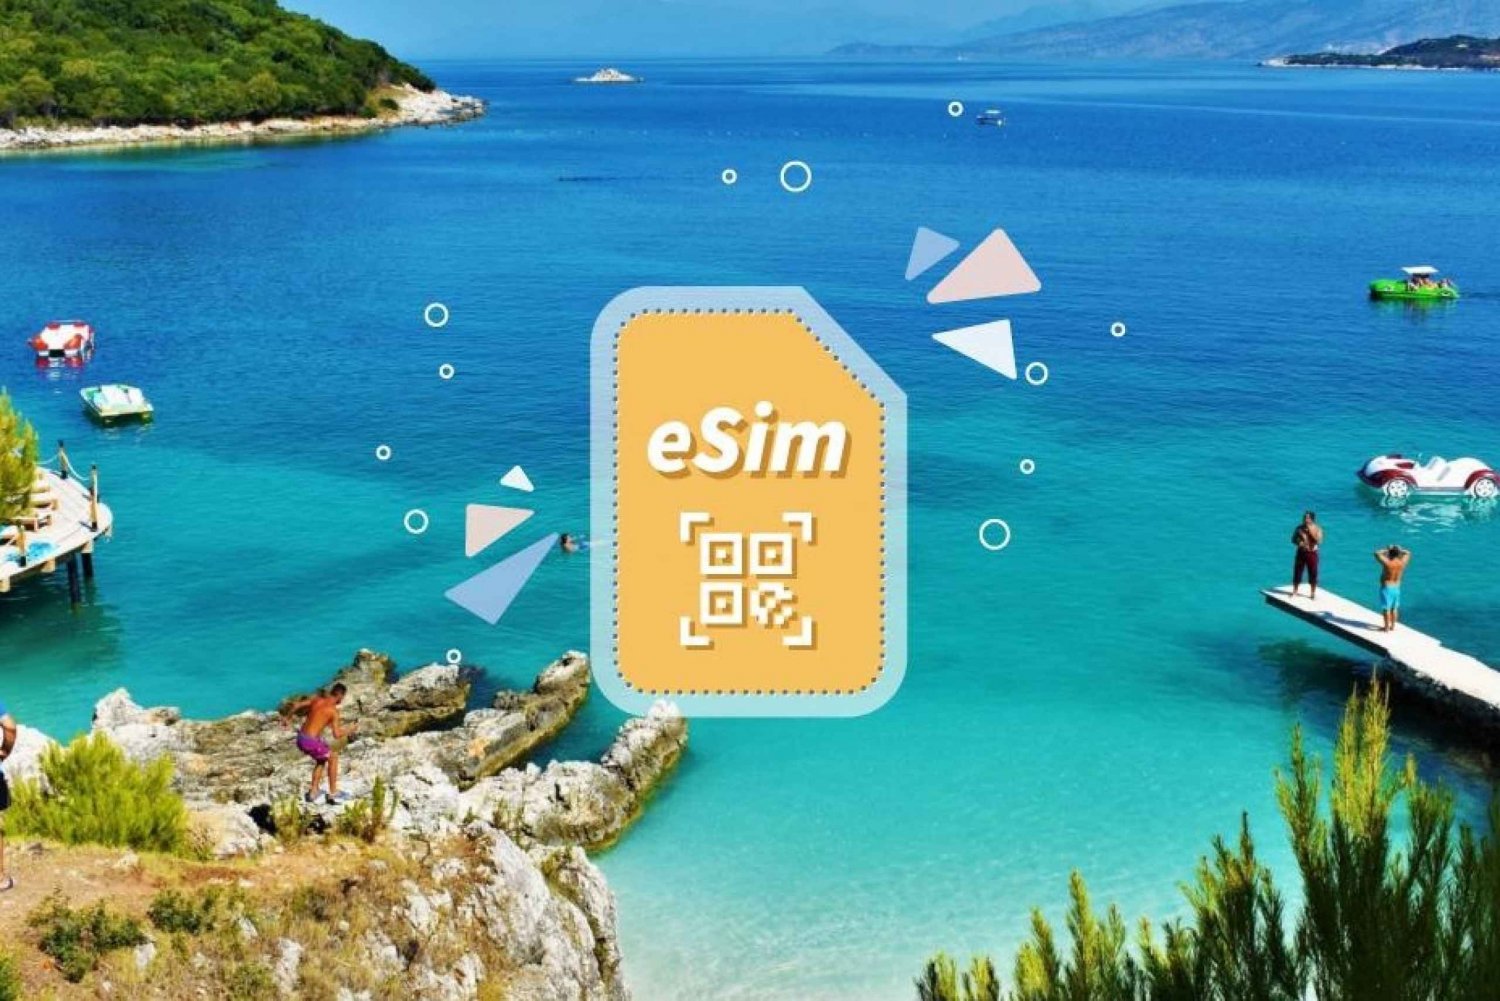 Albania/Europa: Plan de datos móviles eSim